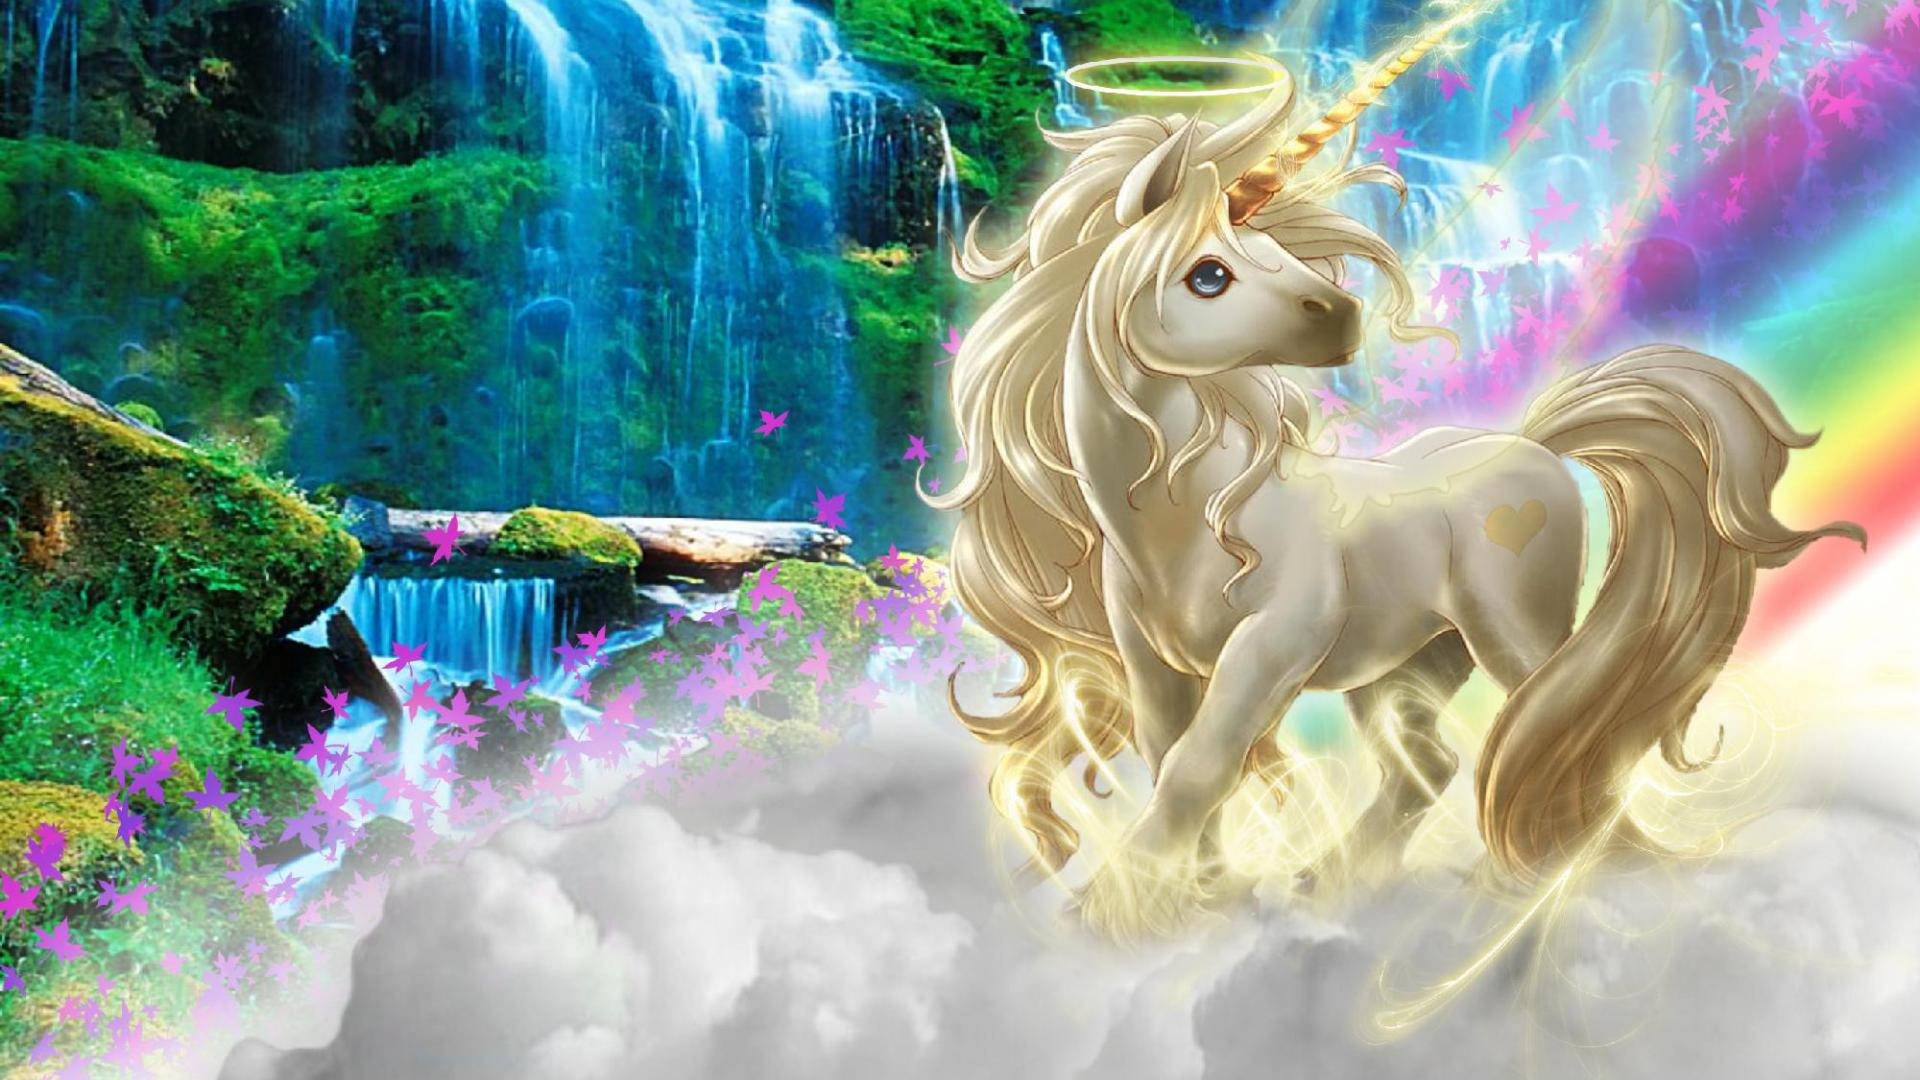 An enchanted Unicorn. Wallpaper